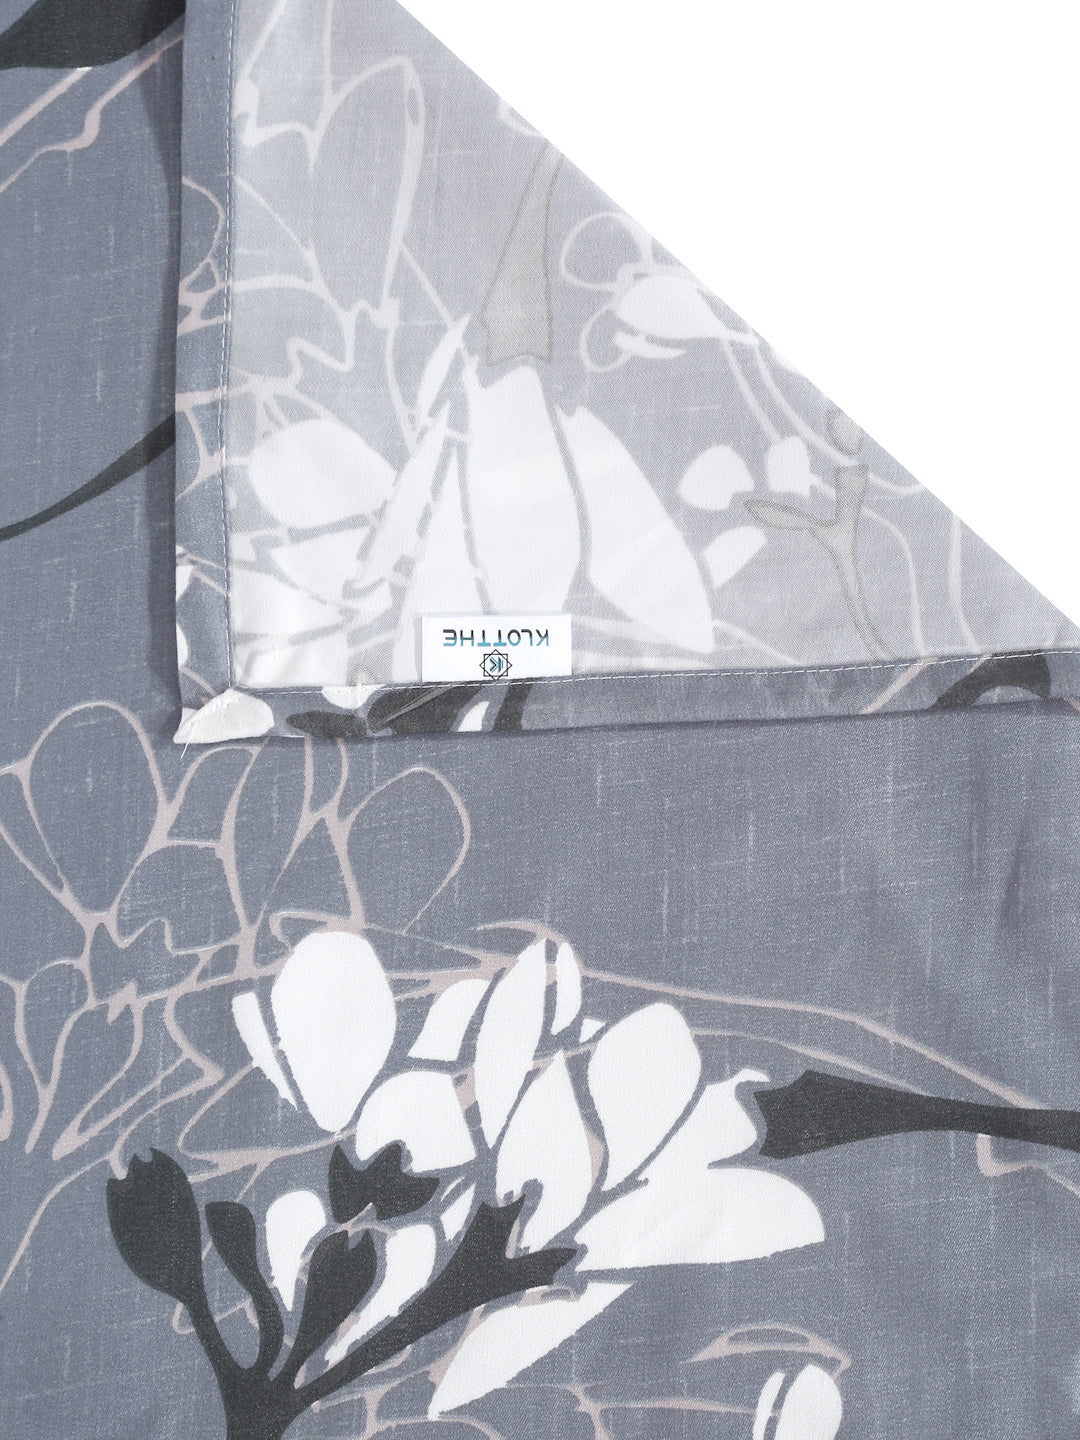 Klotthe Grey Floral 300 TC Cotton Blend Super King Double Bedsheet in Book Fold Packing